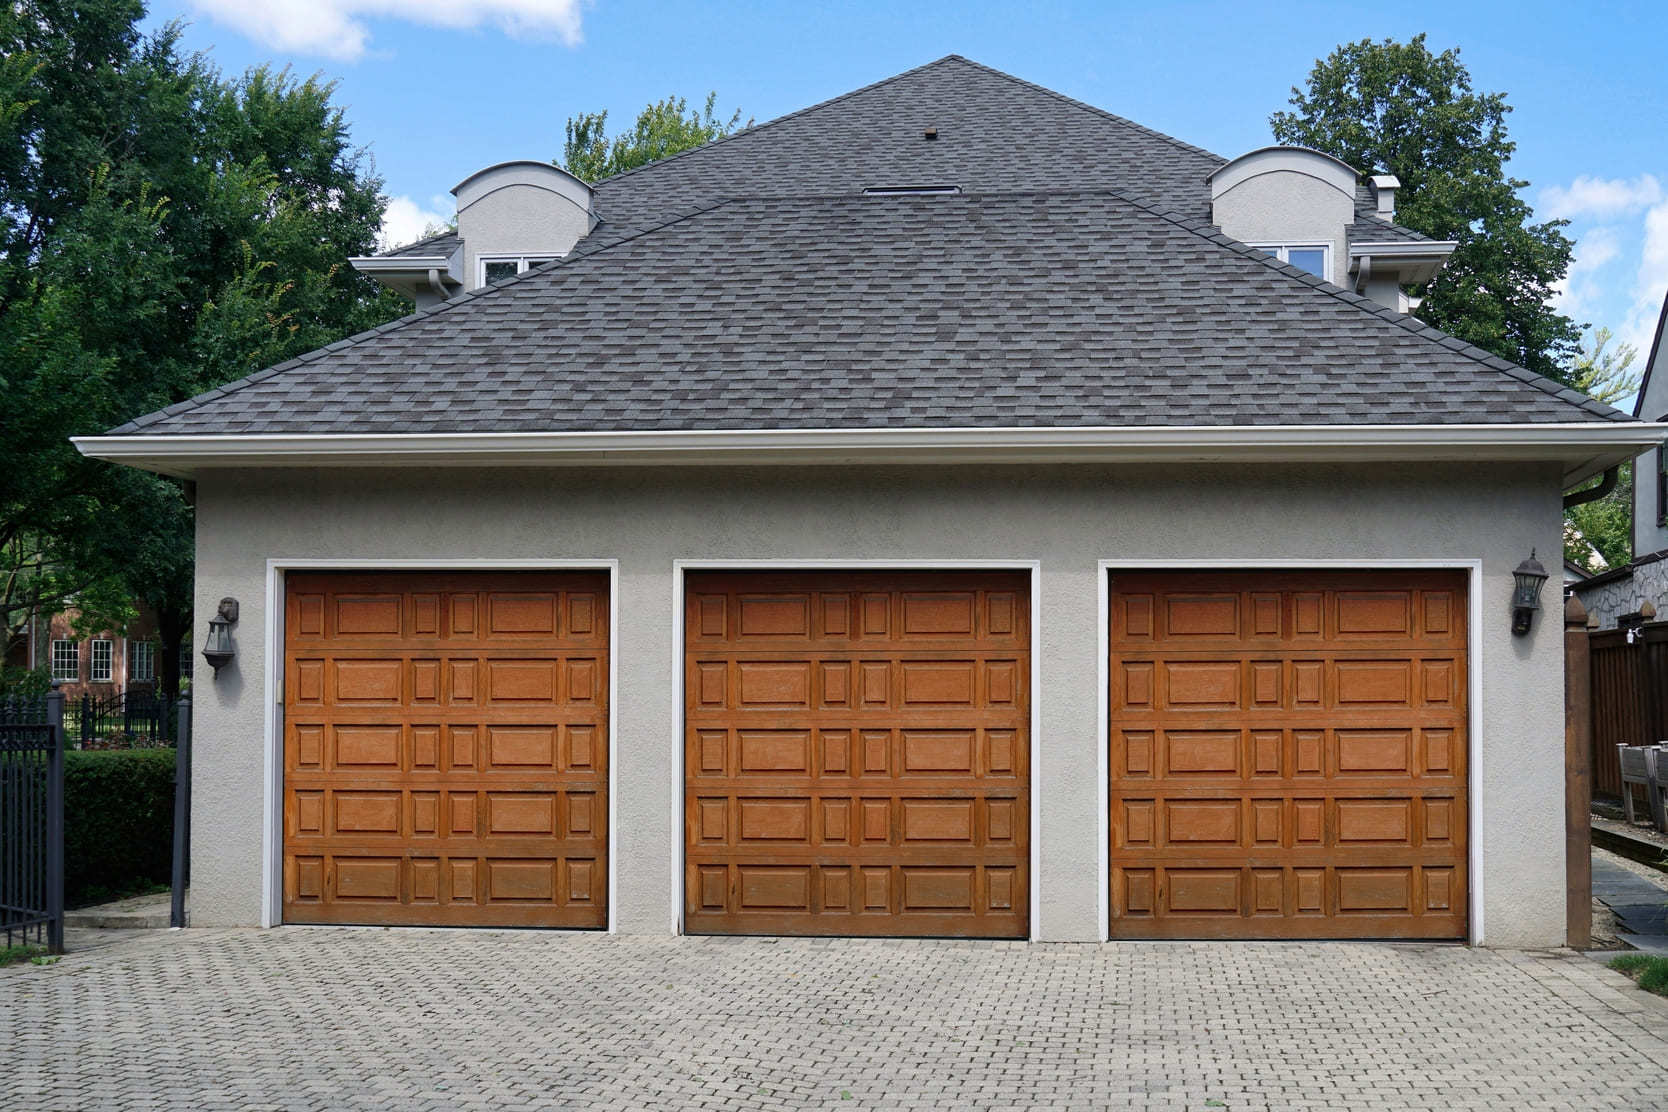 Ontario home with a three-car garage